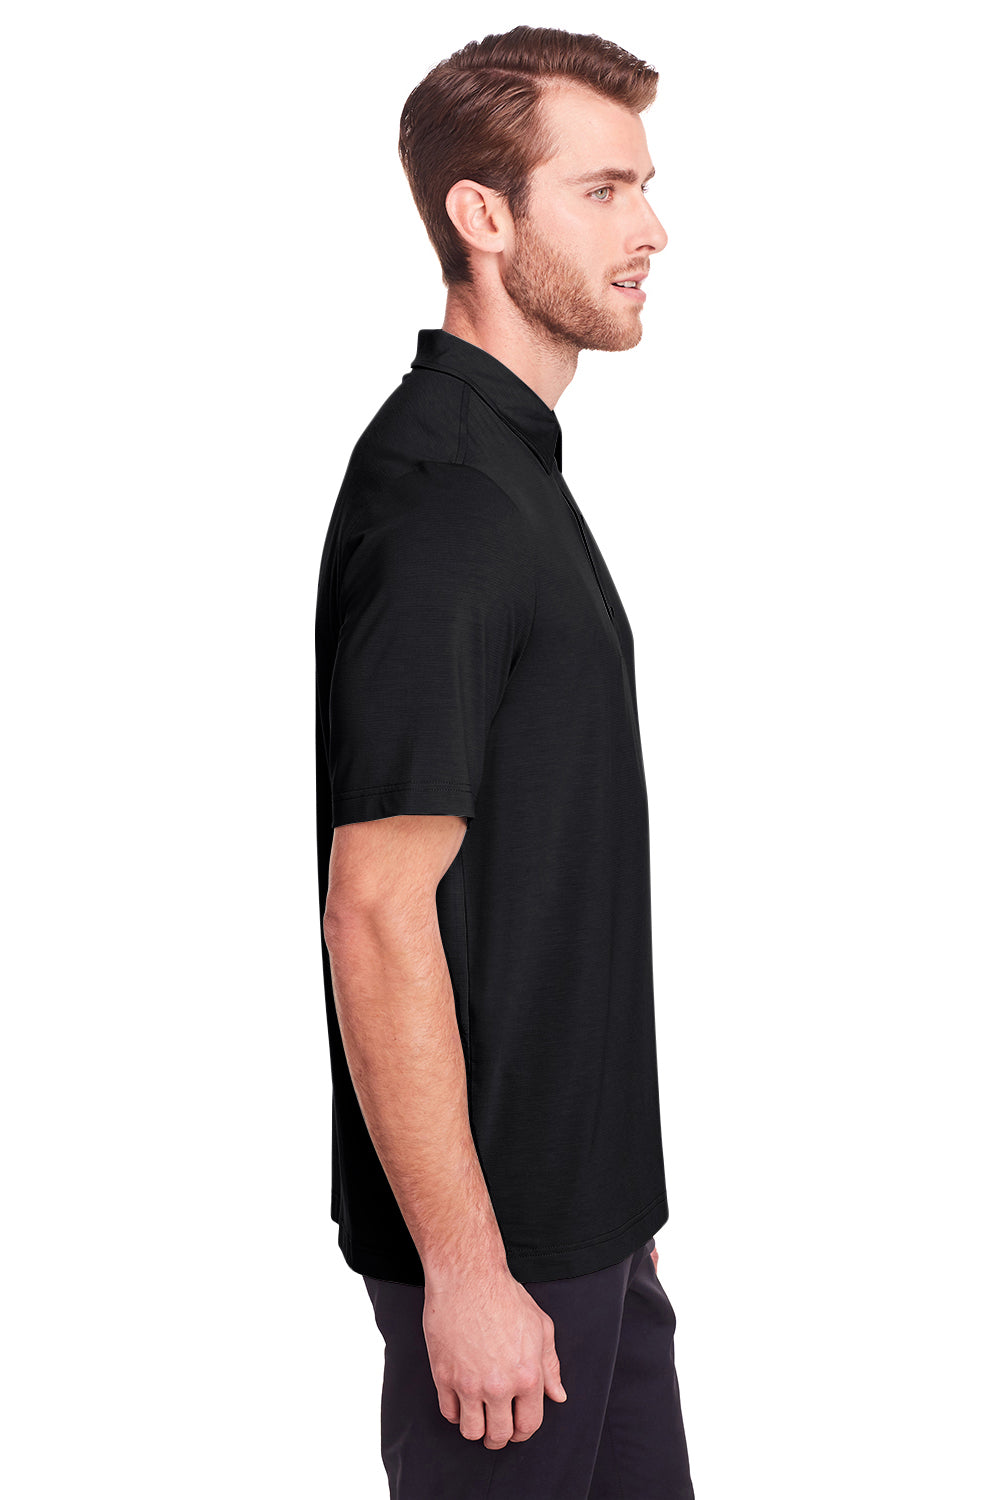 North End NE100 Mens Jaq Performance Moisture Wicking Short Sleeve Polo Shirt Black Side